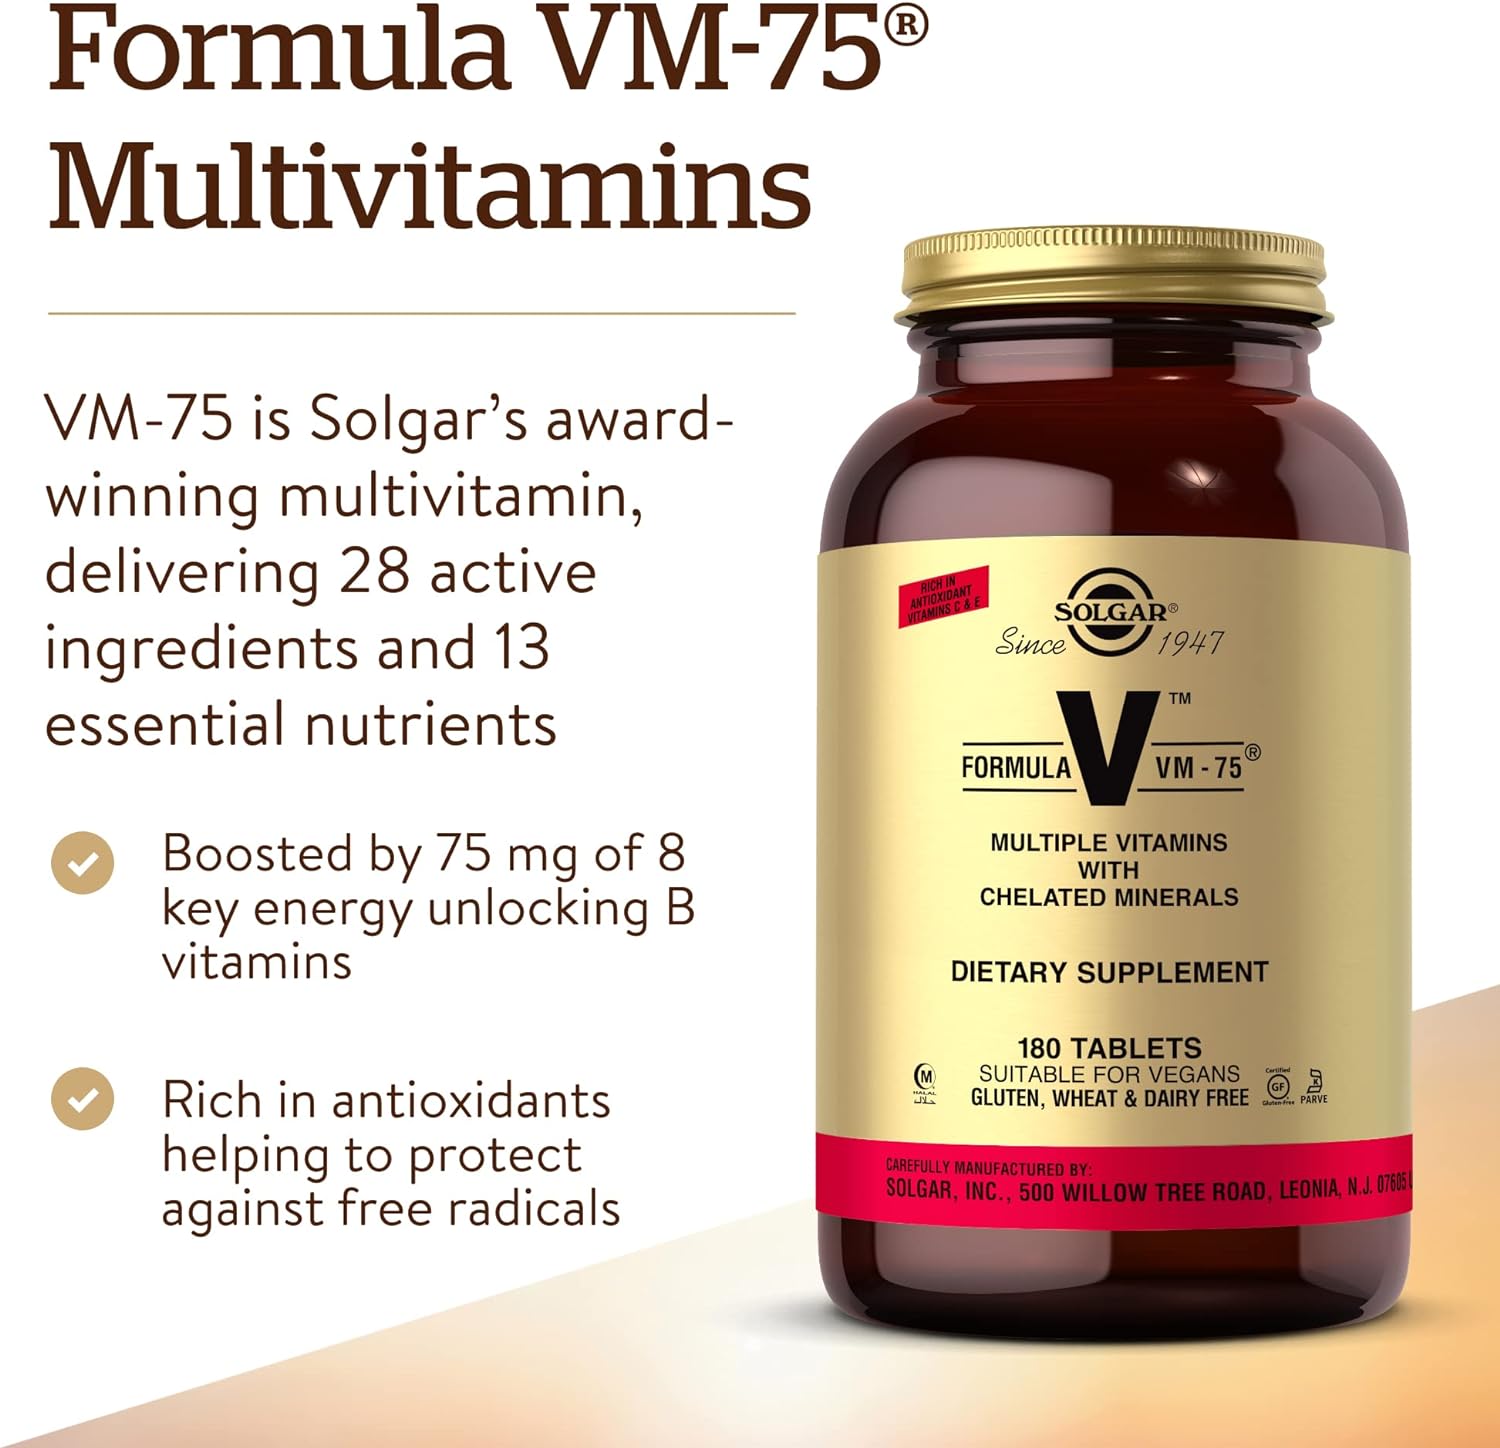 Solgar Formula VM-75, 180 Tablets - Multivitamin with Chelated Minerals - Vitamin A, B6, B12, C, D, E - Biotin, Magnesium, Calcium, Iron, Zinc - Vegan, Gluten Free, Dairy Free, Kosher - 180 Servings